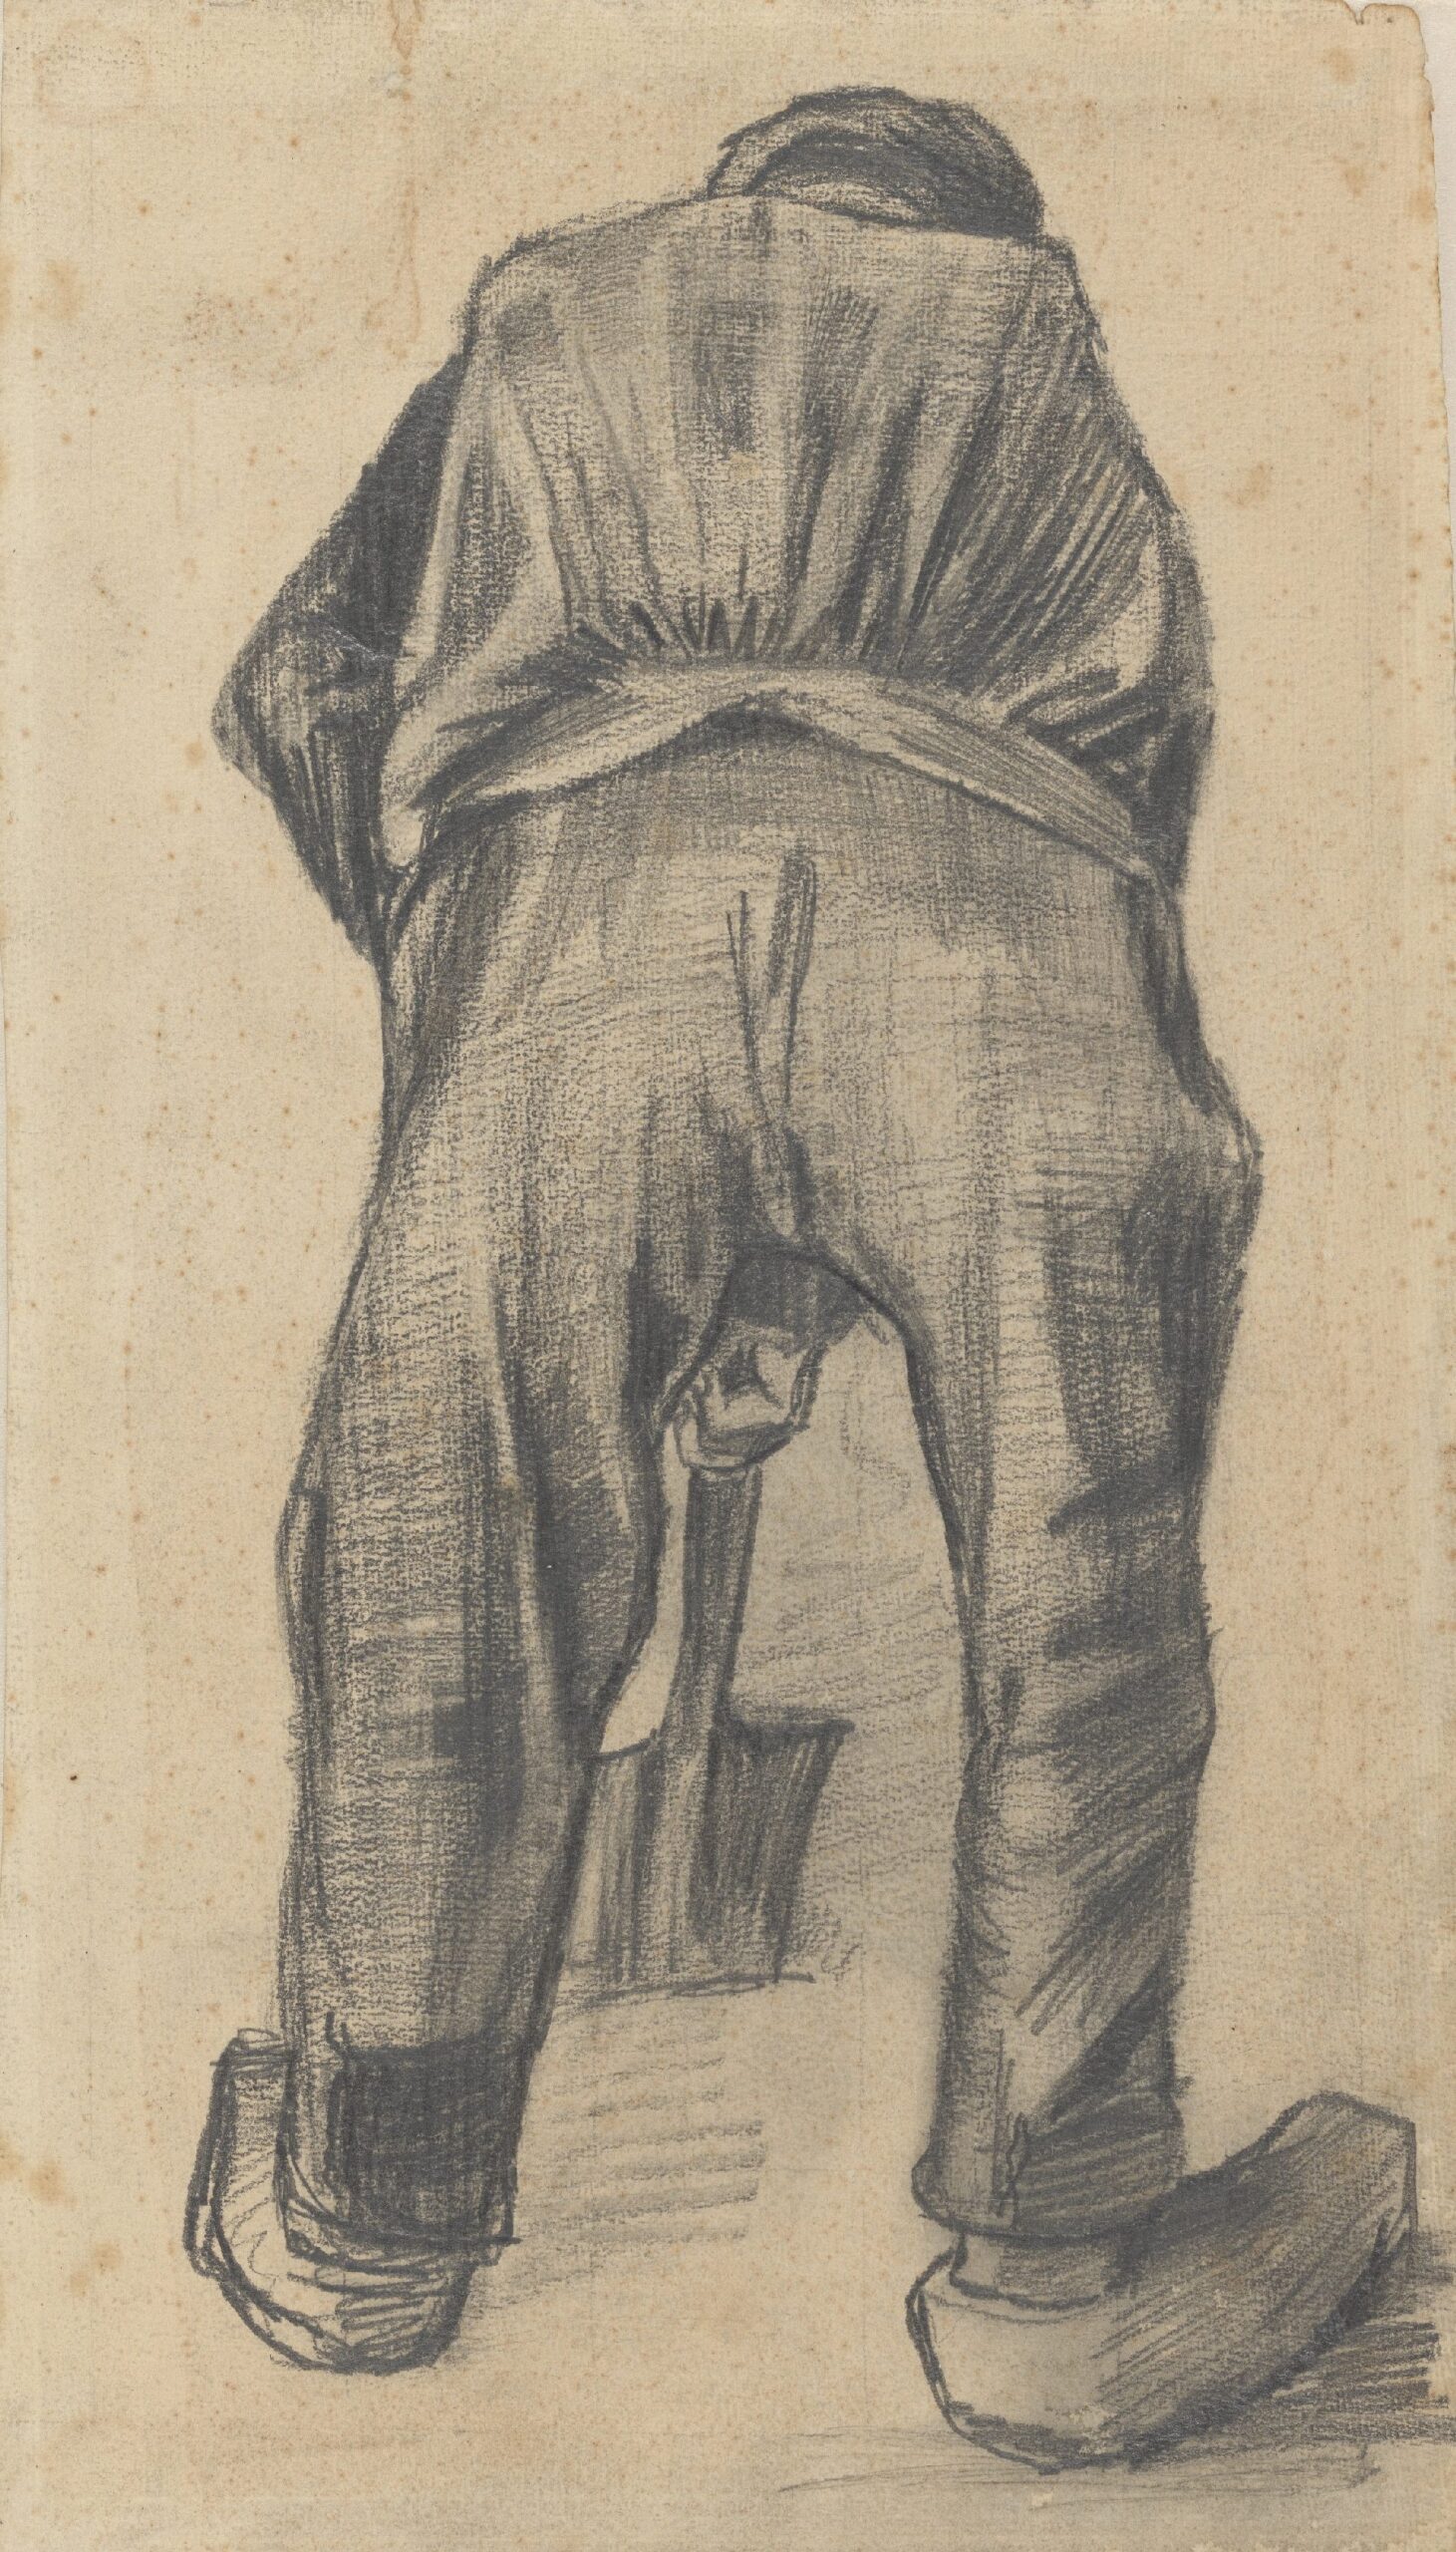 Spitter Vincent van Gogh (1853 - 1890), Den Haag, november 1882